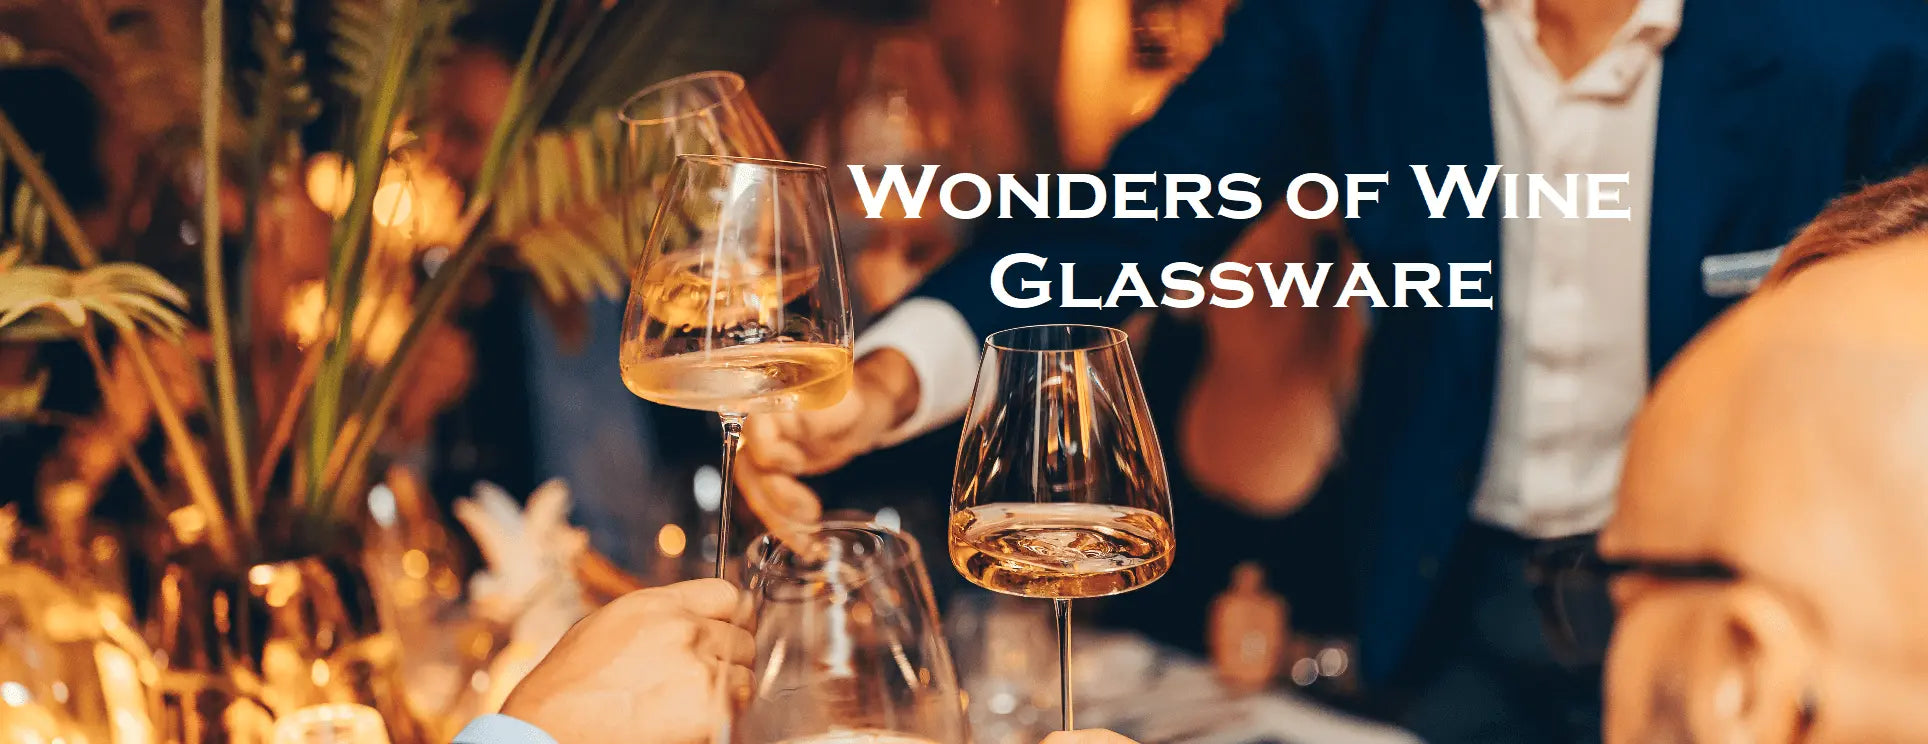 Wonders of Wine - Glassware